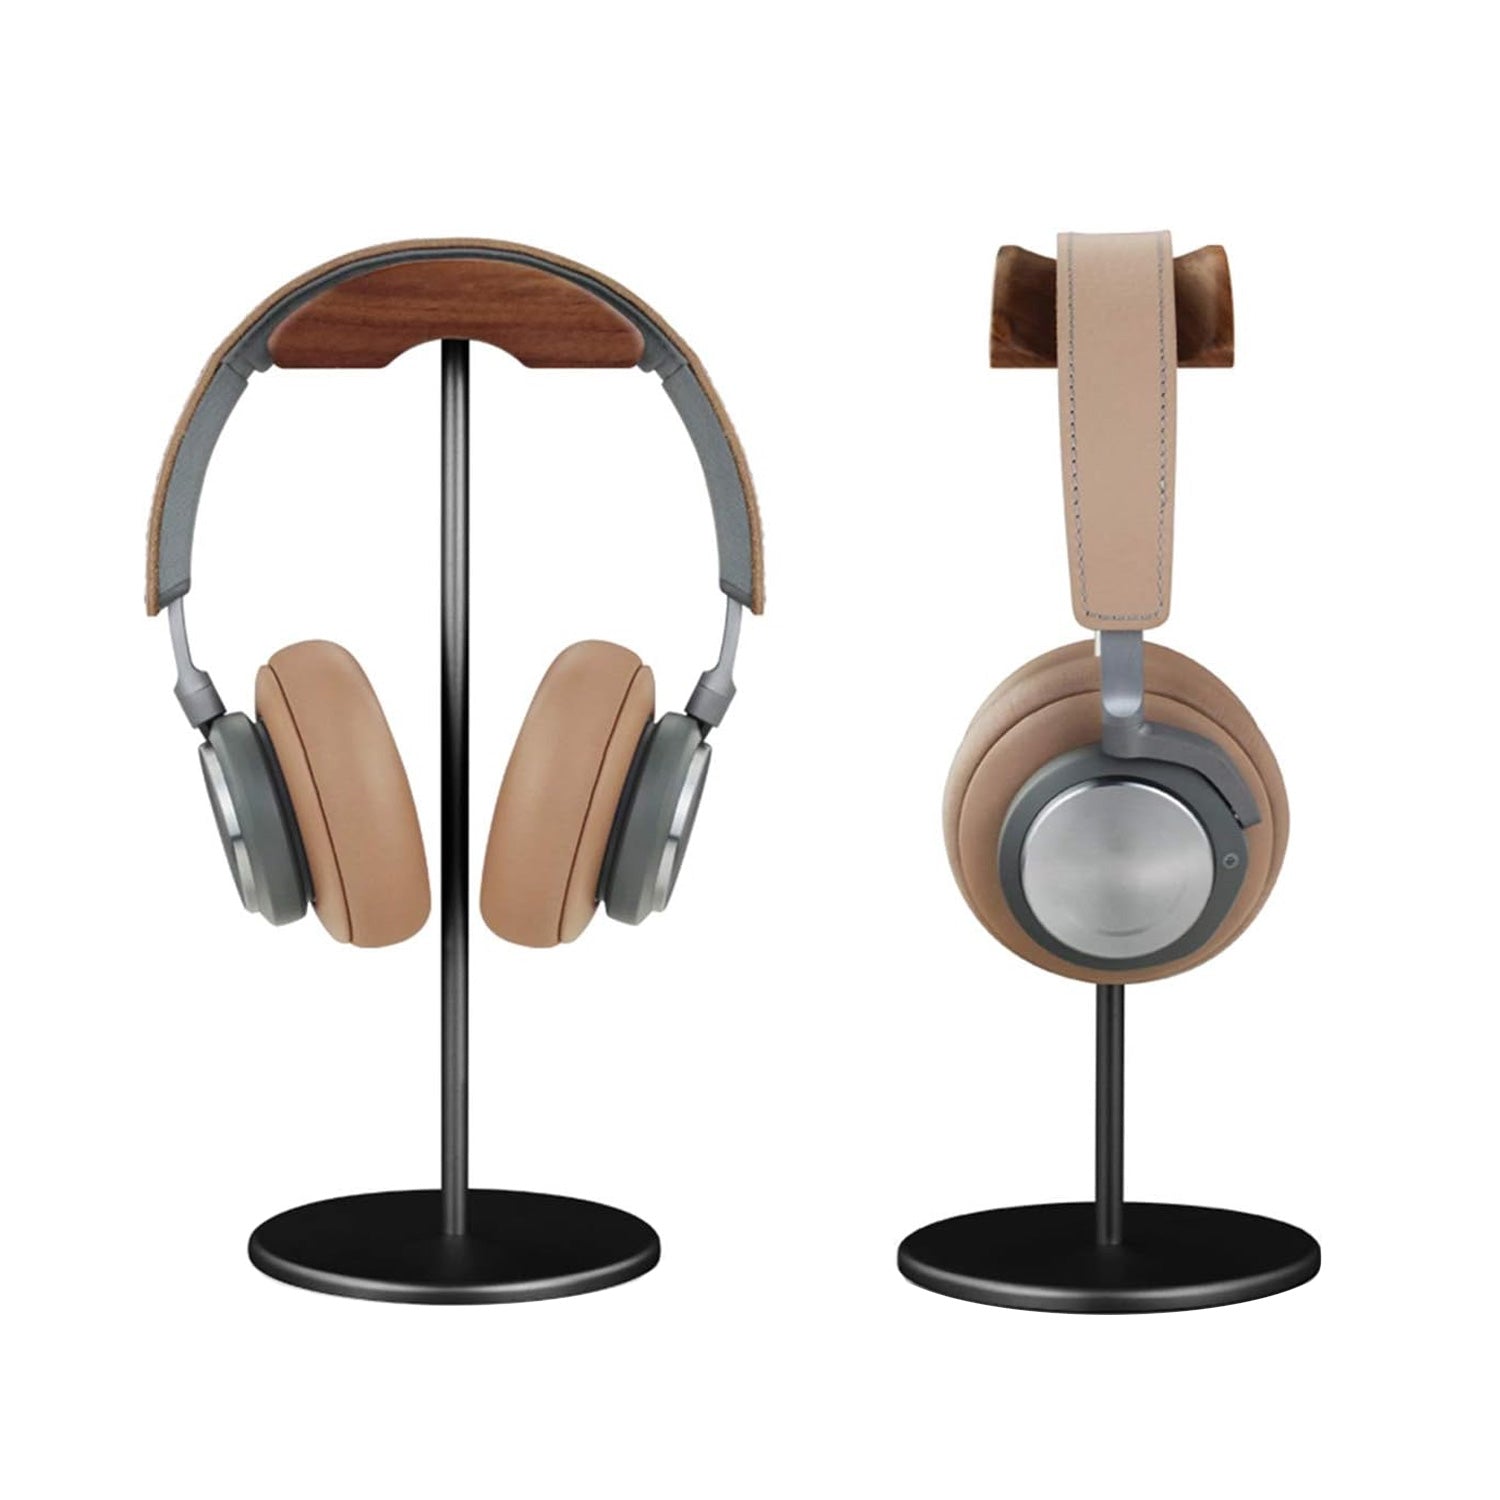 Kopfhörerhalter aus Holz